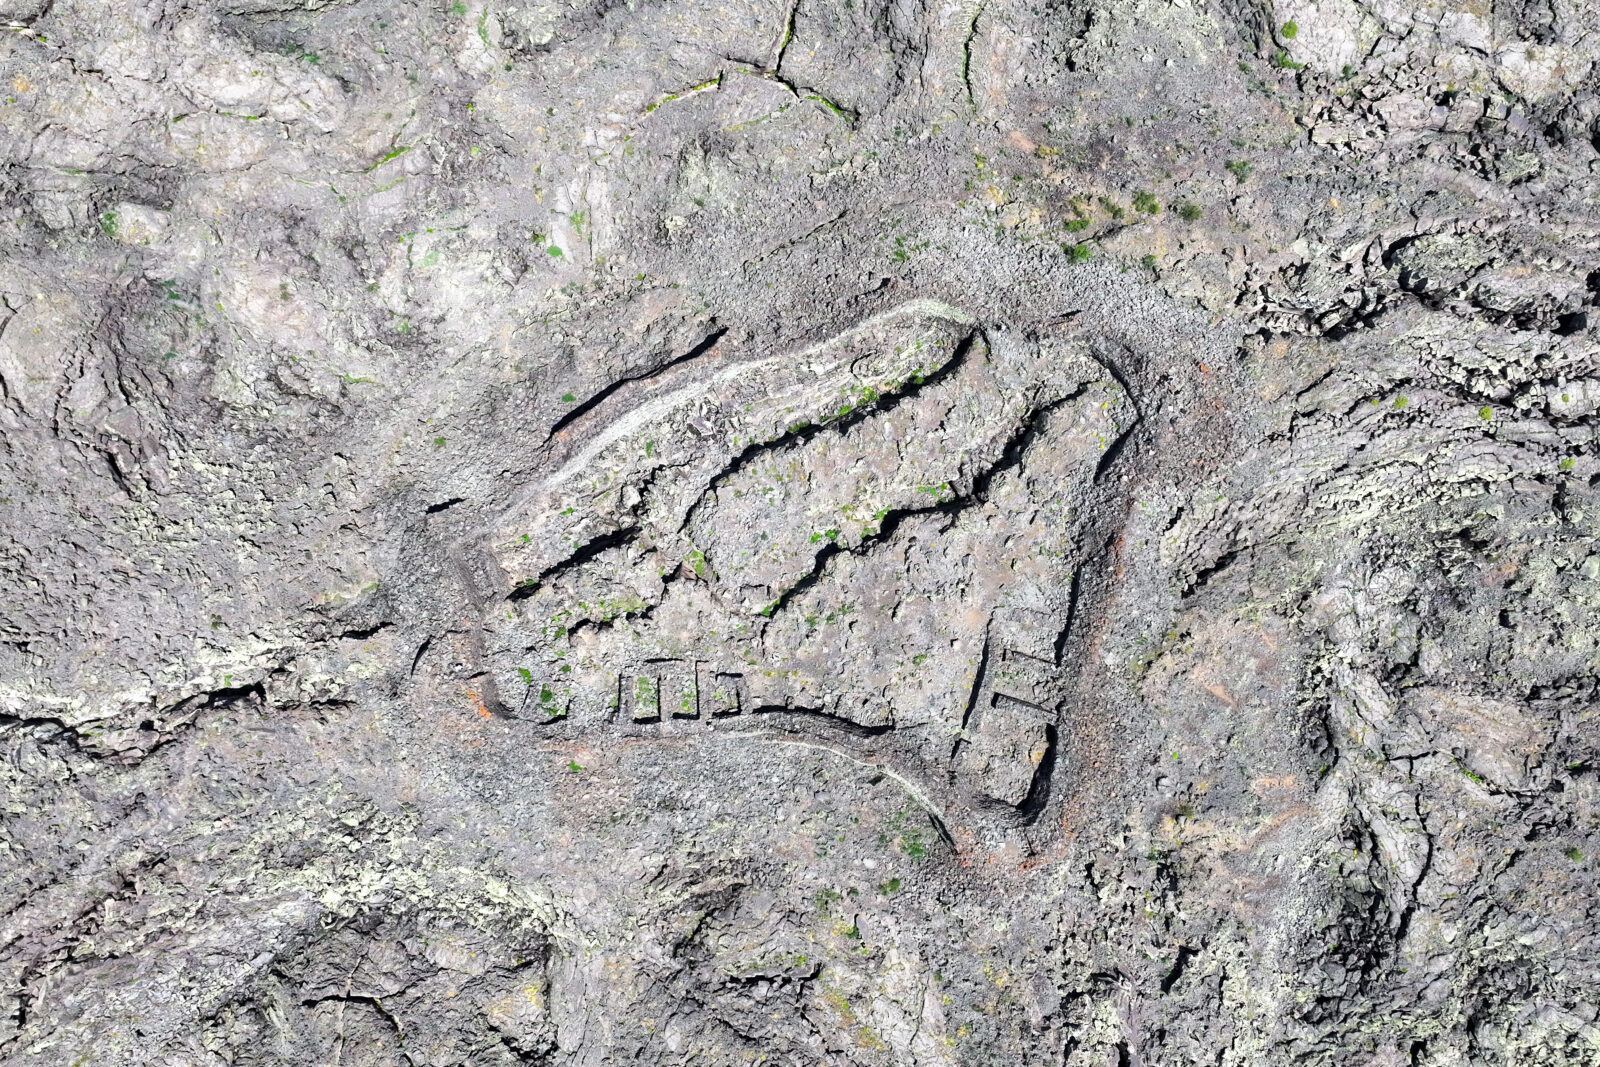 Mysterious medieval castle discovered among lava rocks in Türkiye